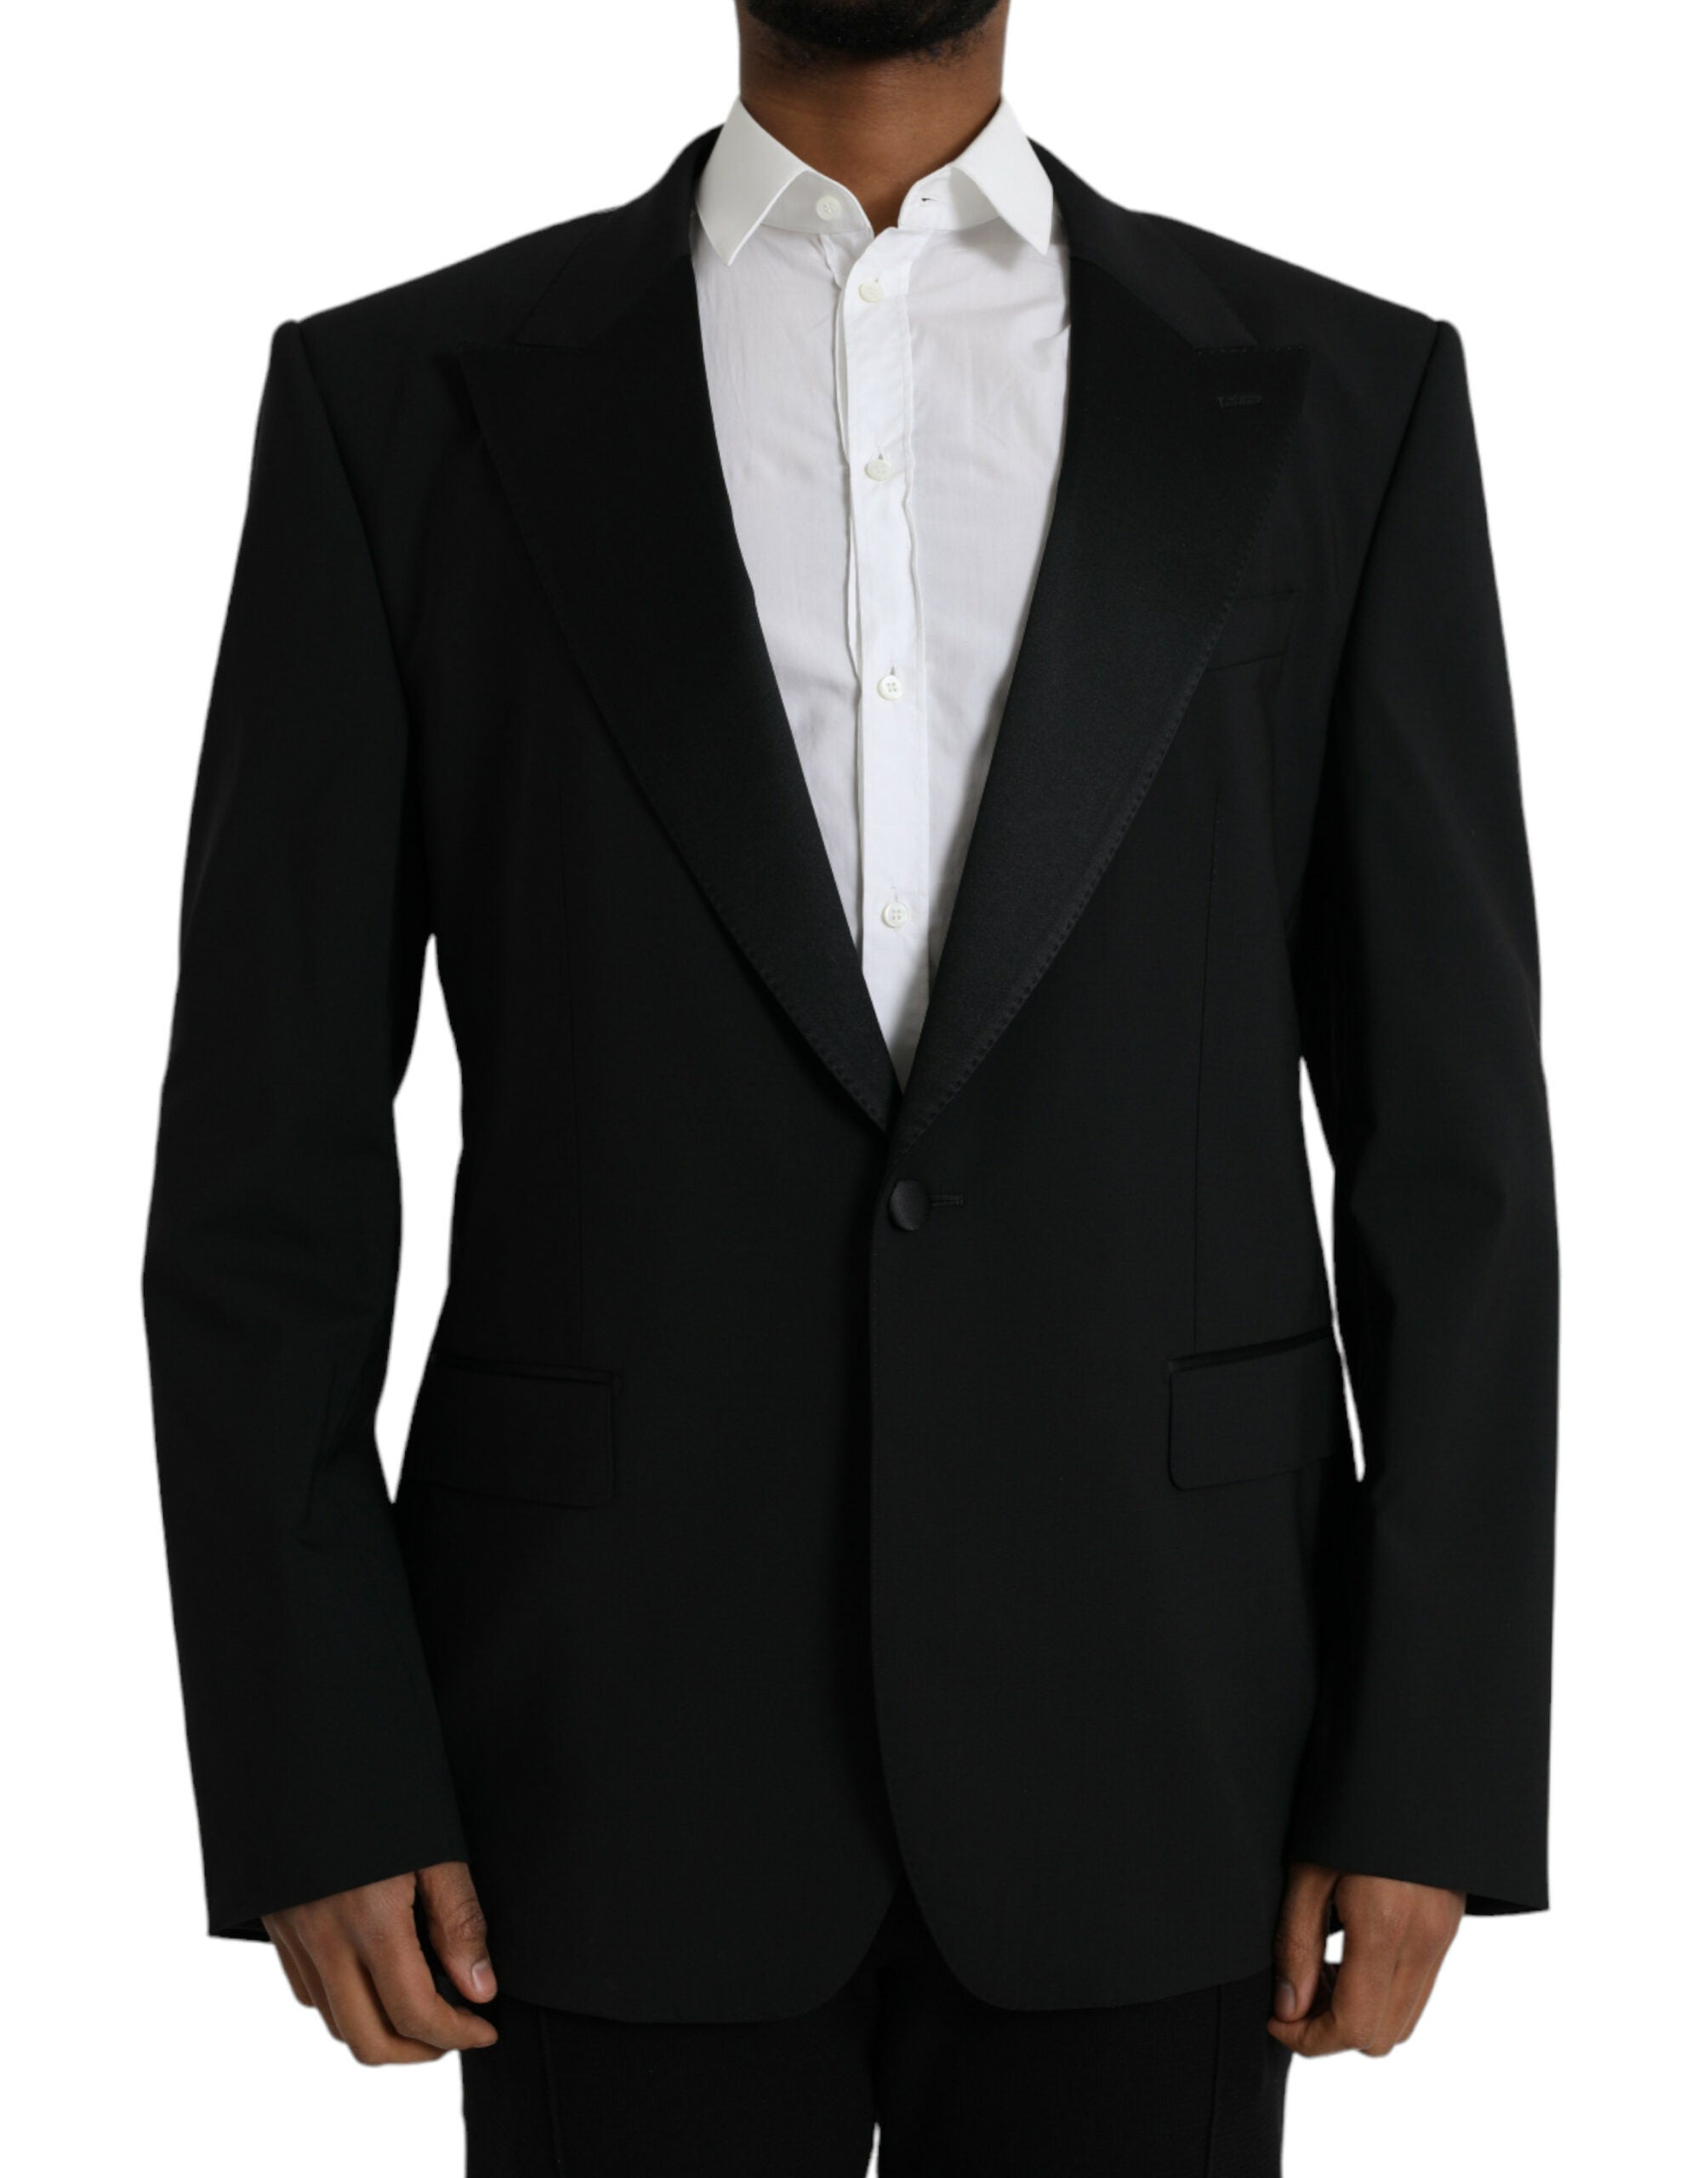 Black SICILIA Single Breasted Coat Blazer - Divitiae Glamour